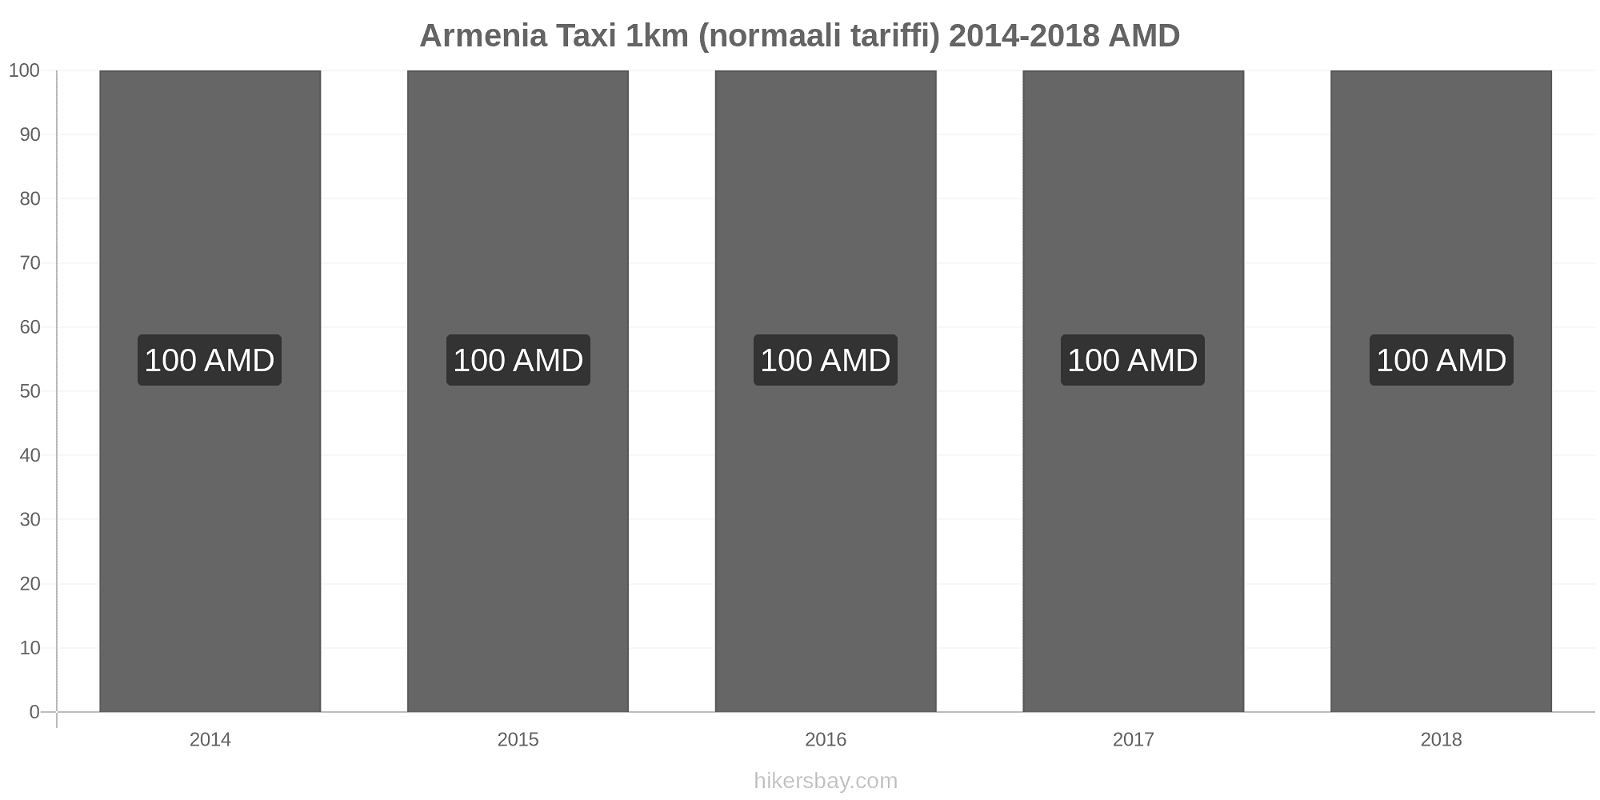 Armenia hintojen muutokset Taxi 1km (normaali tariffi) hikersbay.com